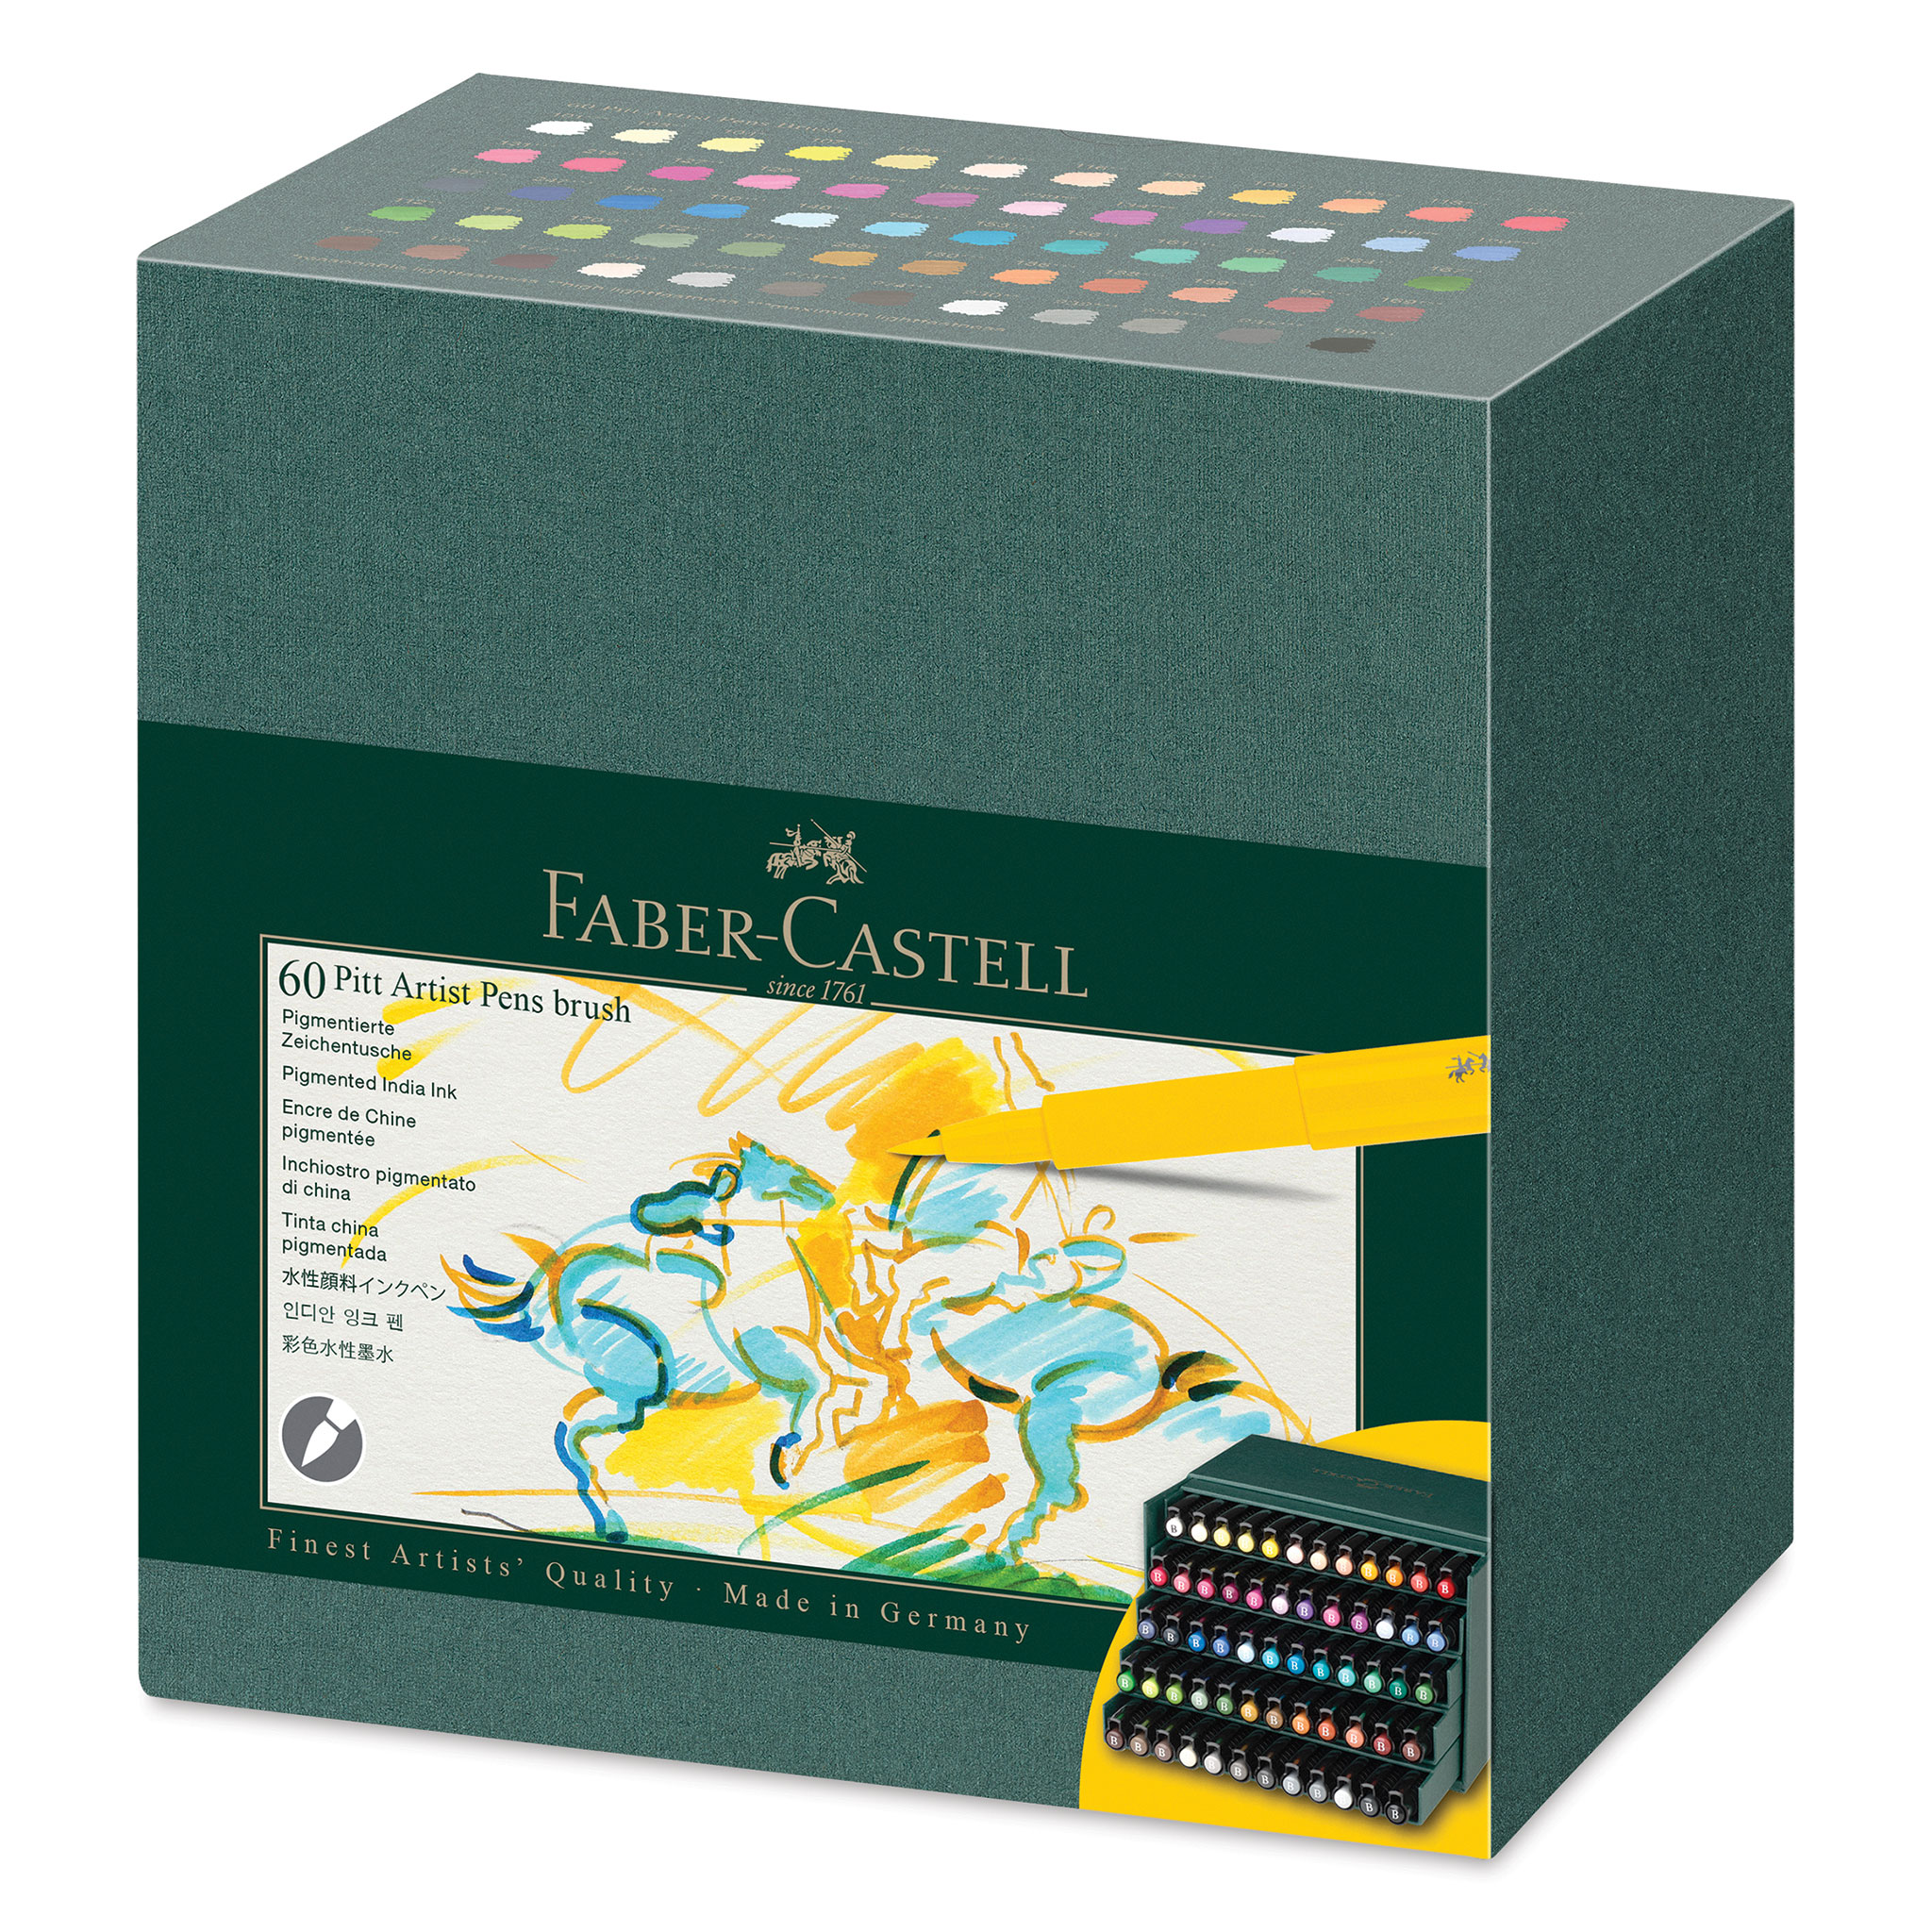 Faber-Castell Pitt Calligraphy Pen Set - Assorted Colors, Set of 6, BLICK  Art Materials